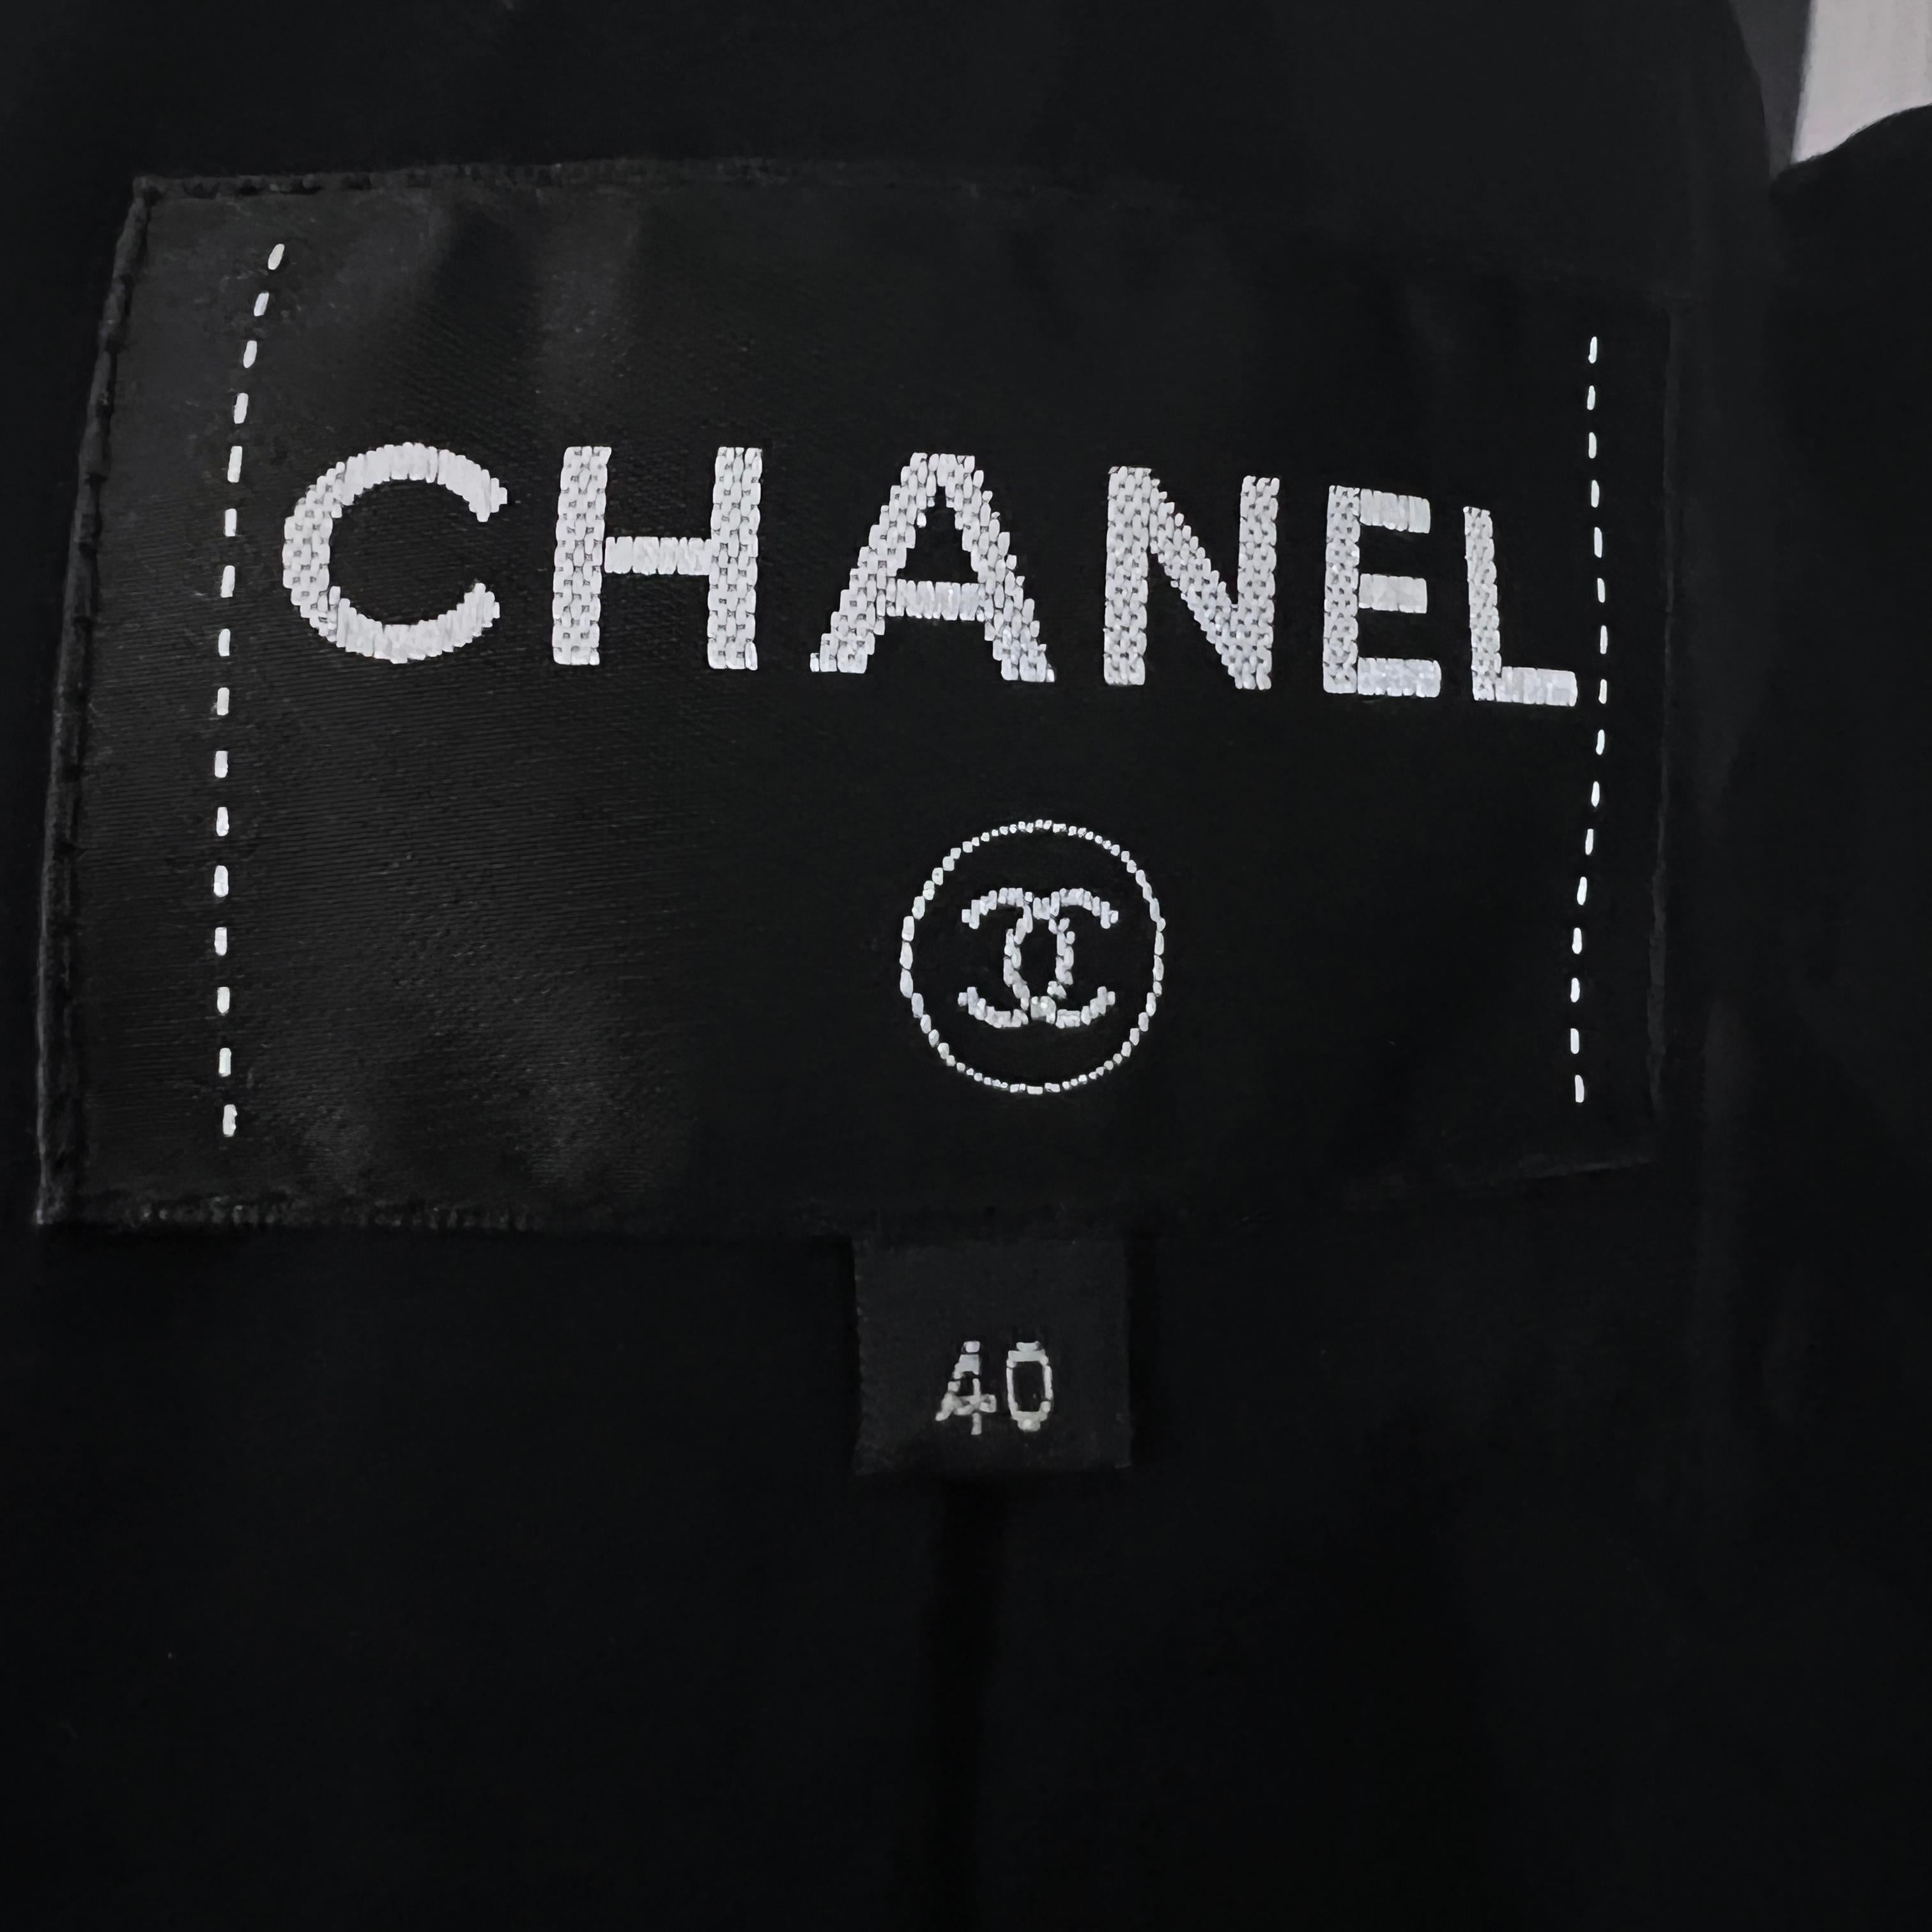 Chanel New Paris / Cosmopolite Runway Jacket For Sale 10